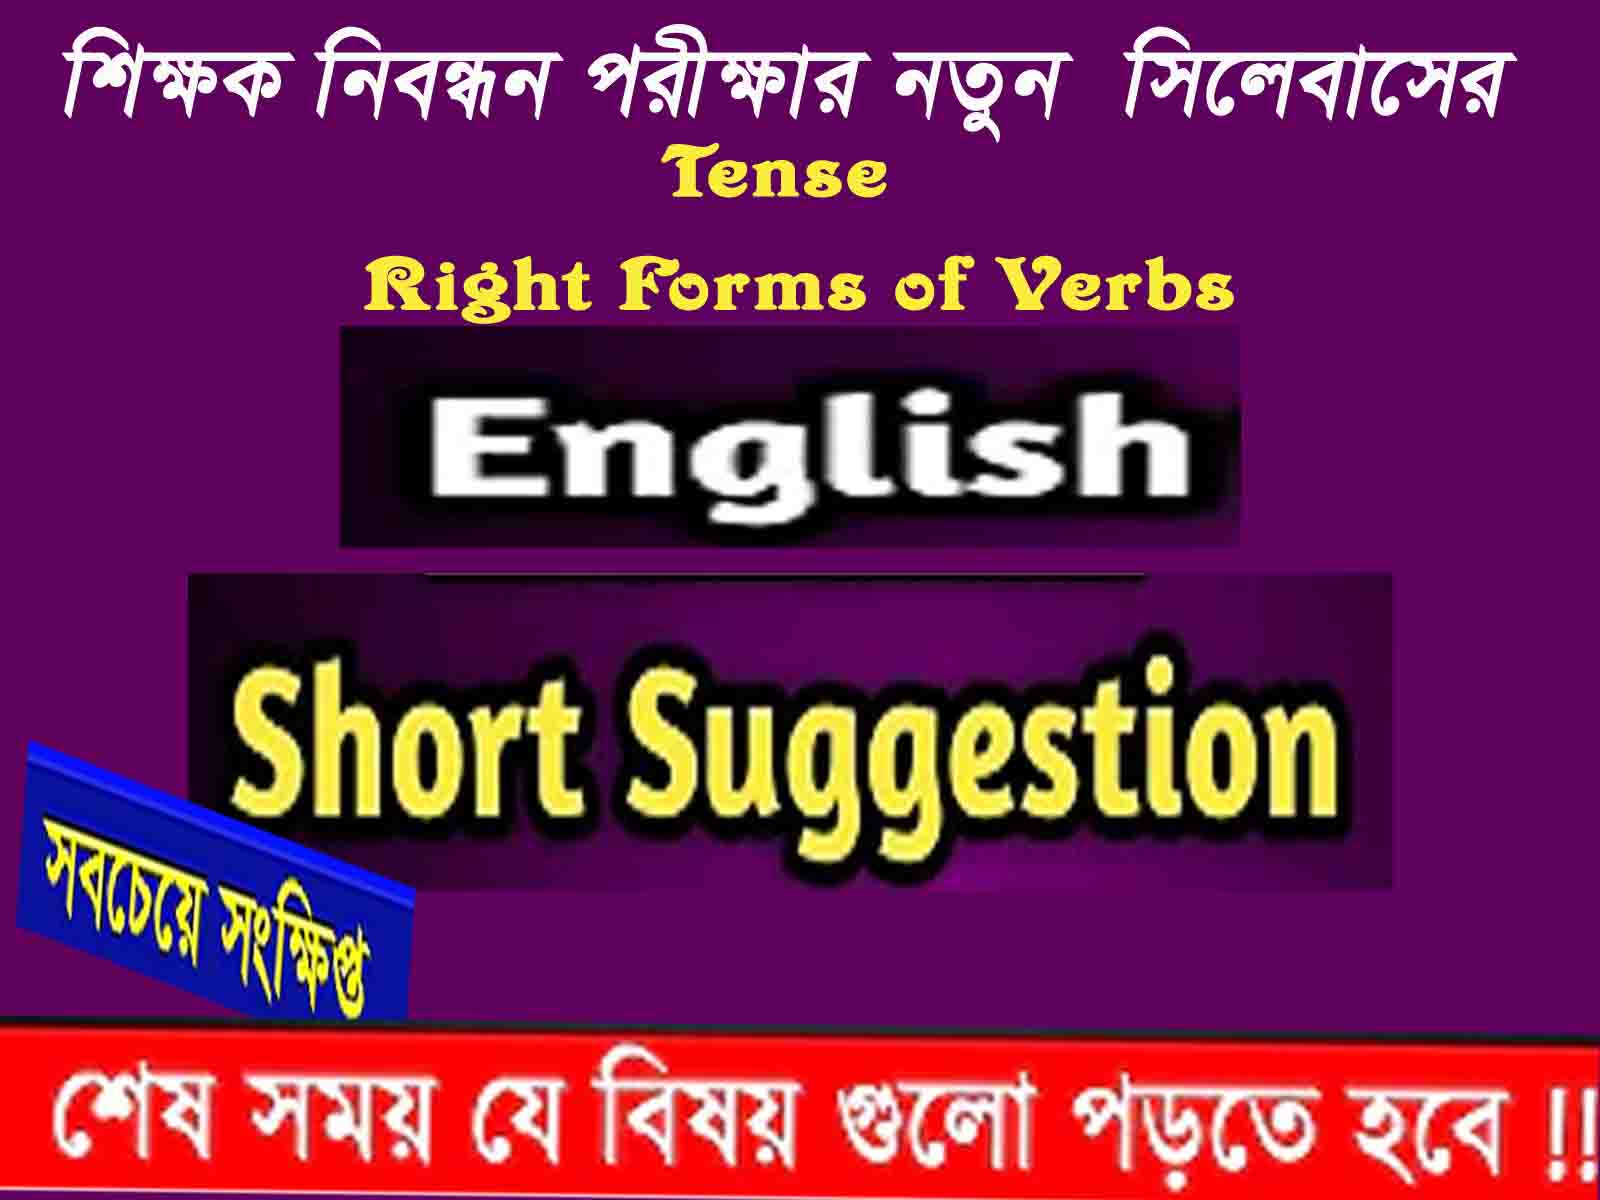 exam-suggestion-subject-english-short-suggestion-tense-right